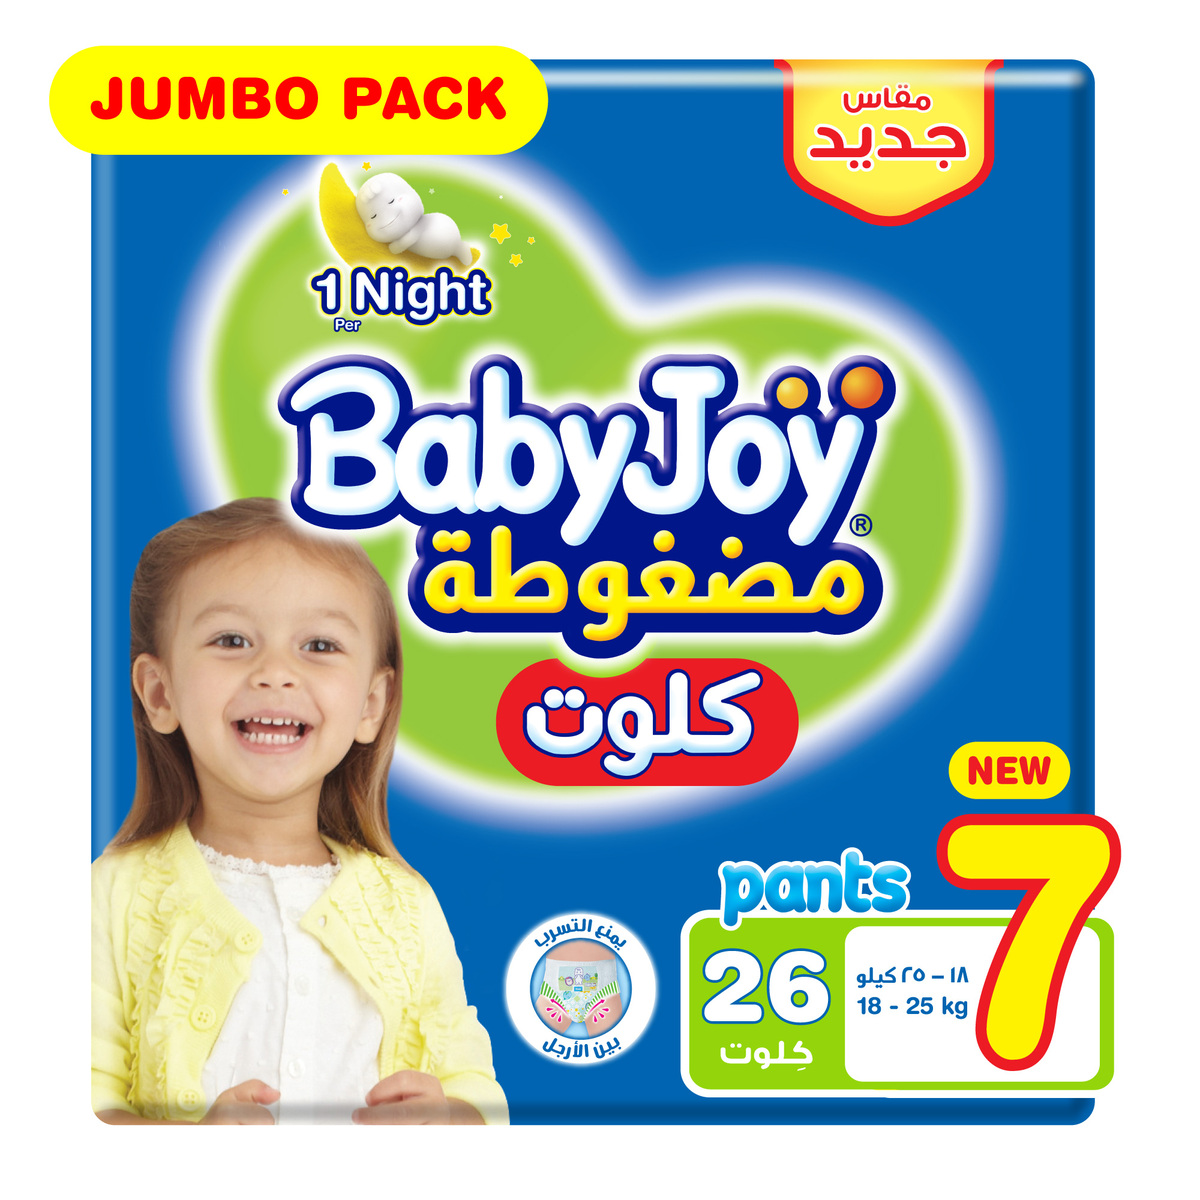 Baby Joy Culote Diaper Pants Size 7 Jumbo Pack 18-25kg 26pcs